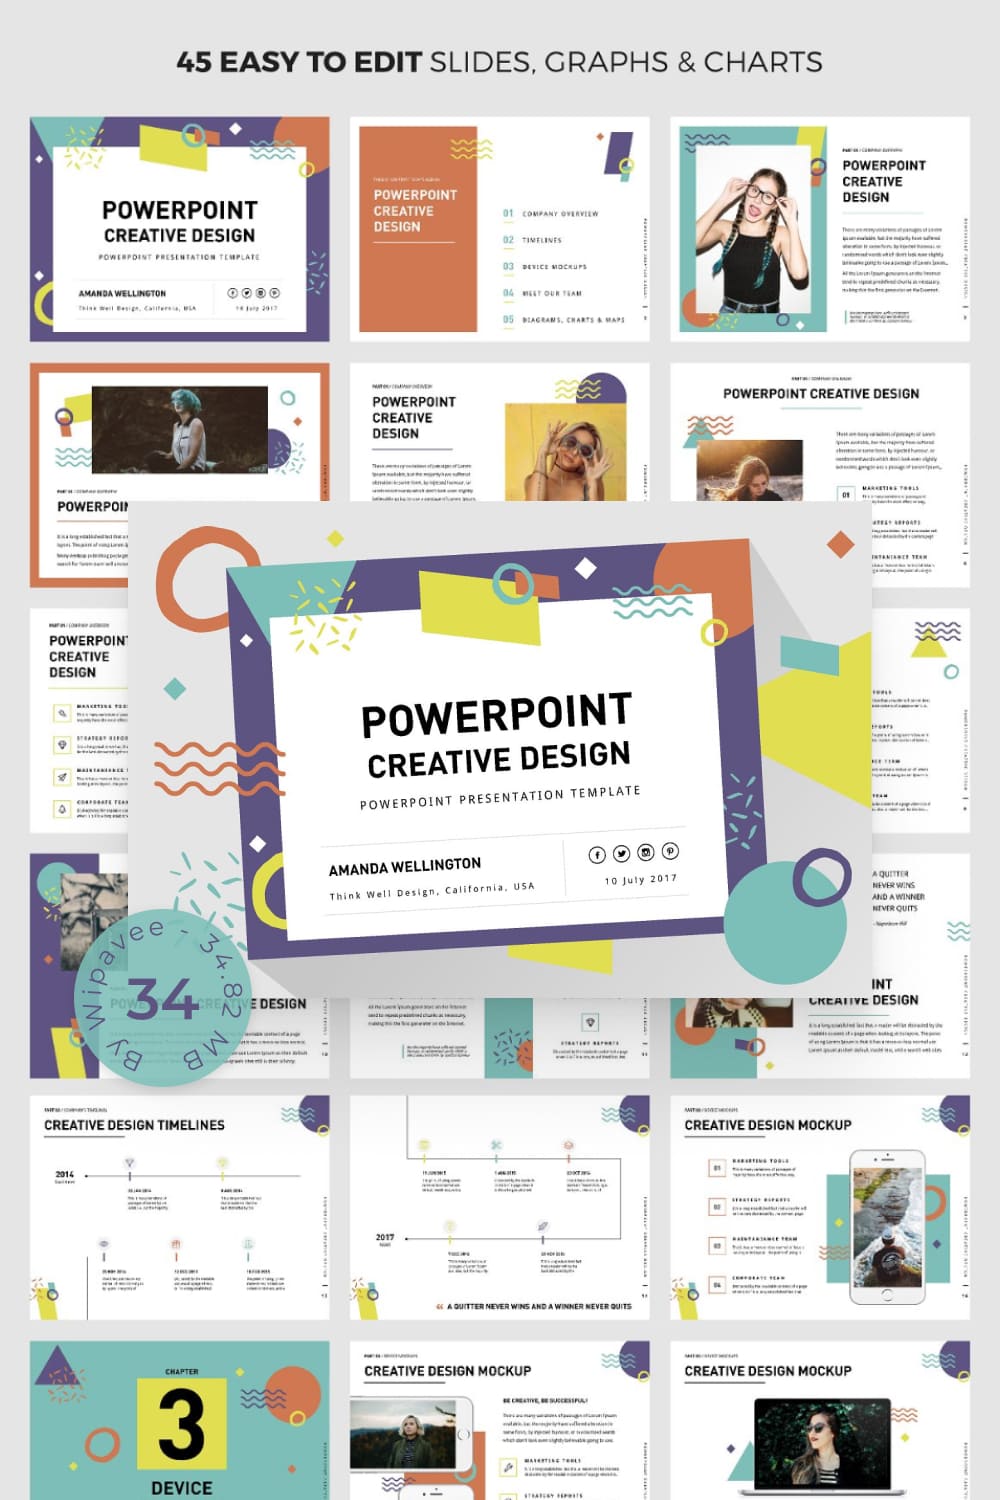 PowerPoint Creative Design Template by MasterBundles Pinterest Collage Image.